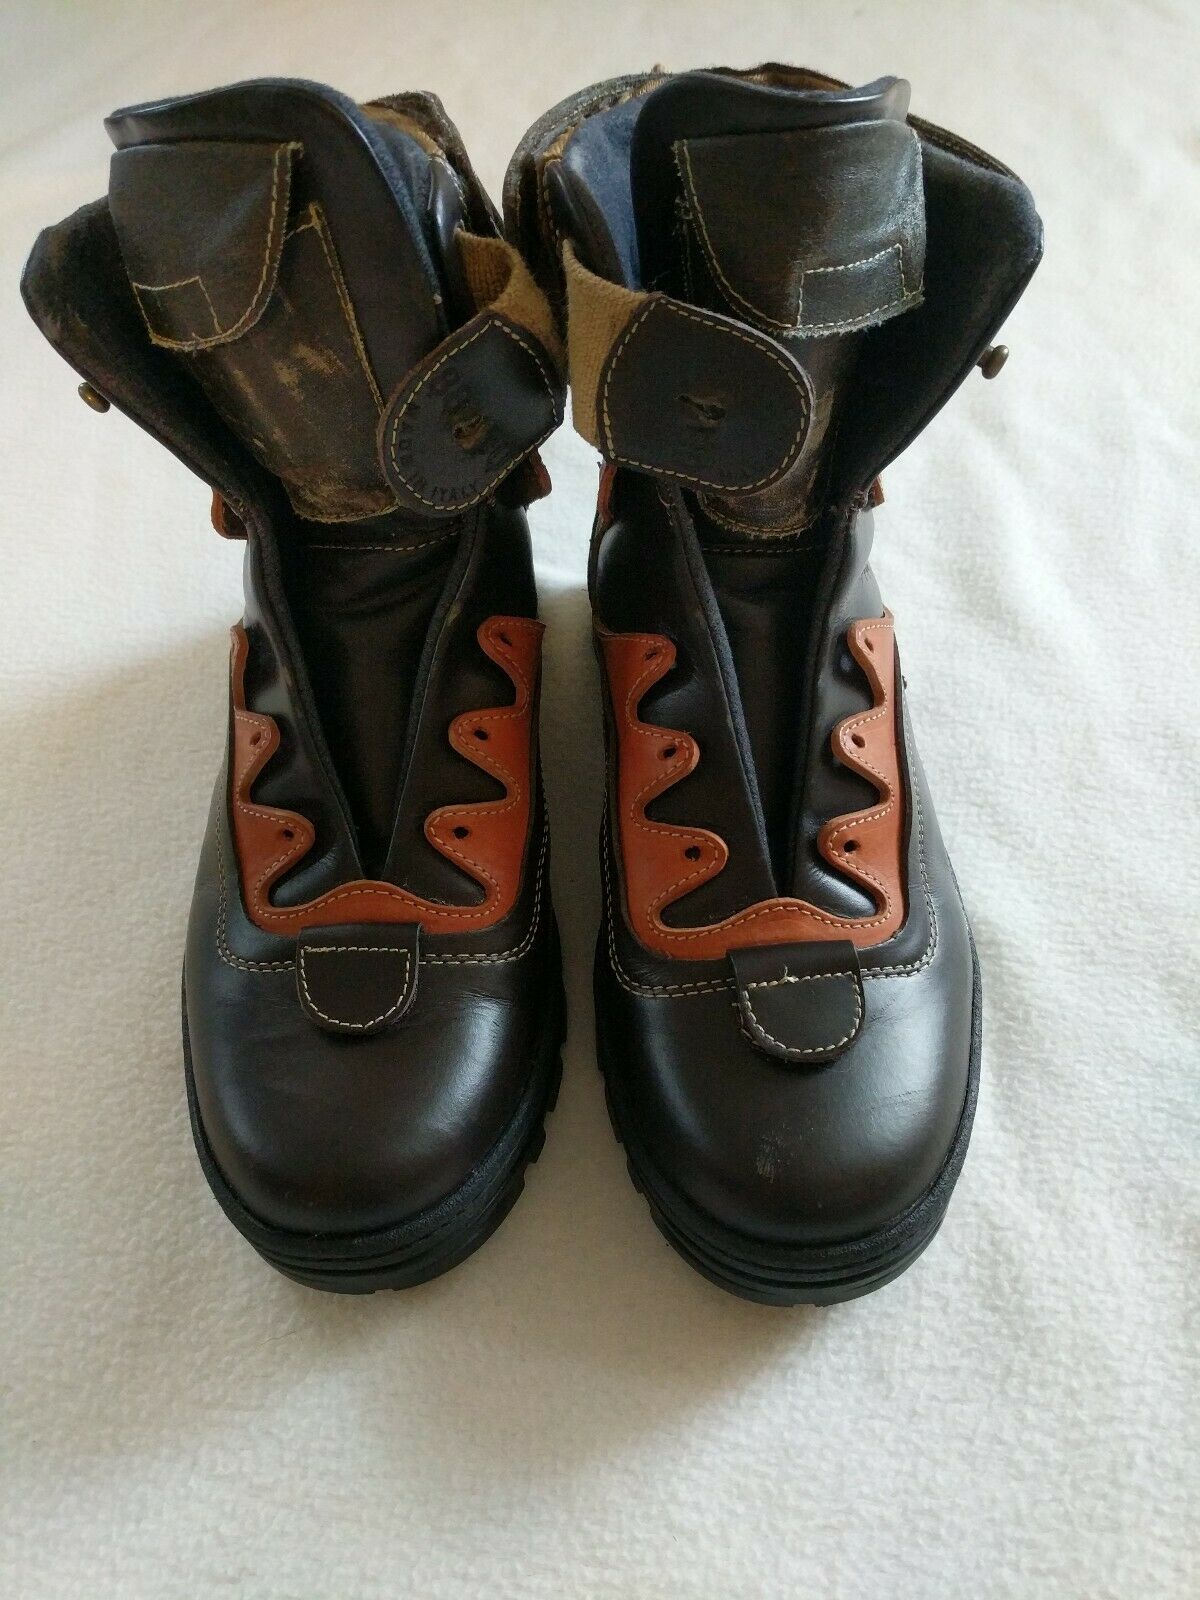 Rare Hiking Boots, European, Leather, Classic Design, US Men's 7, US Women's 8